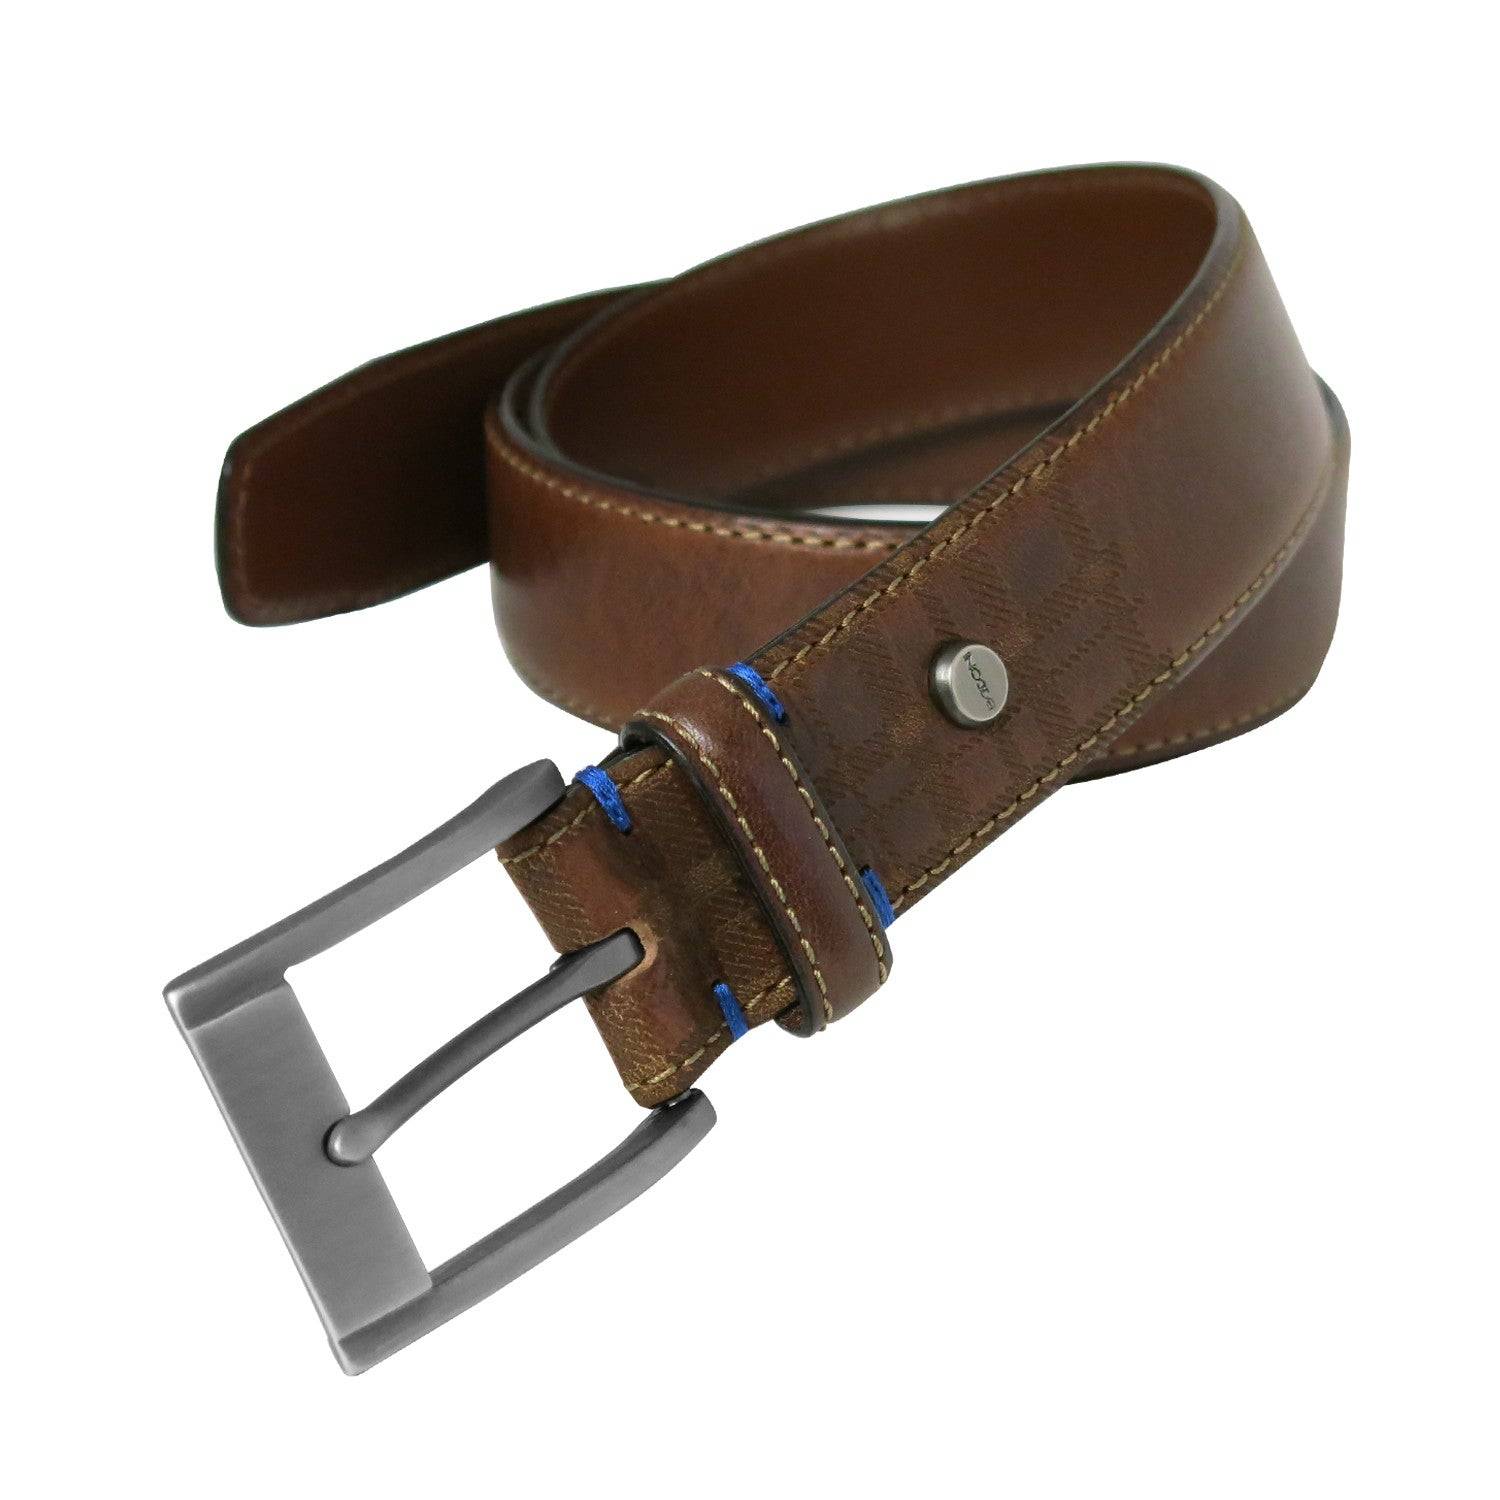 Collins Calfskin Leather Belt